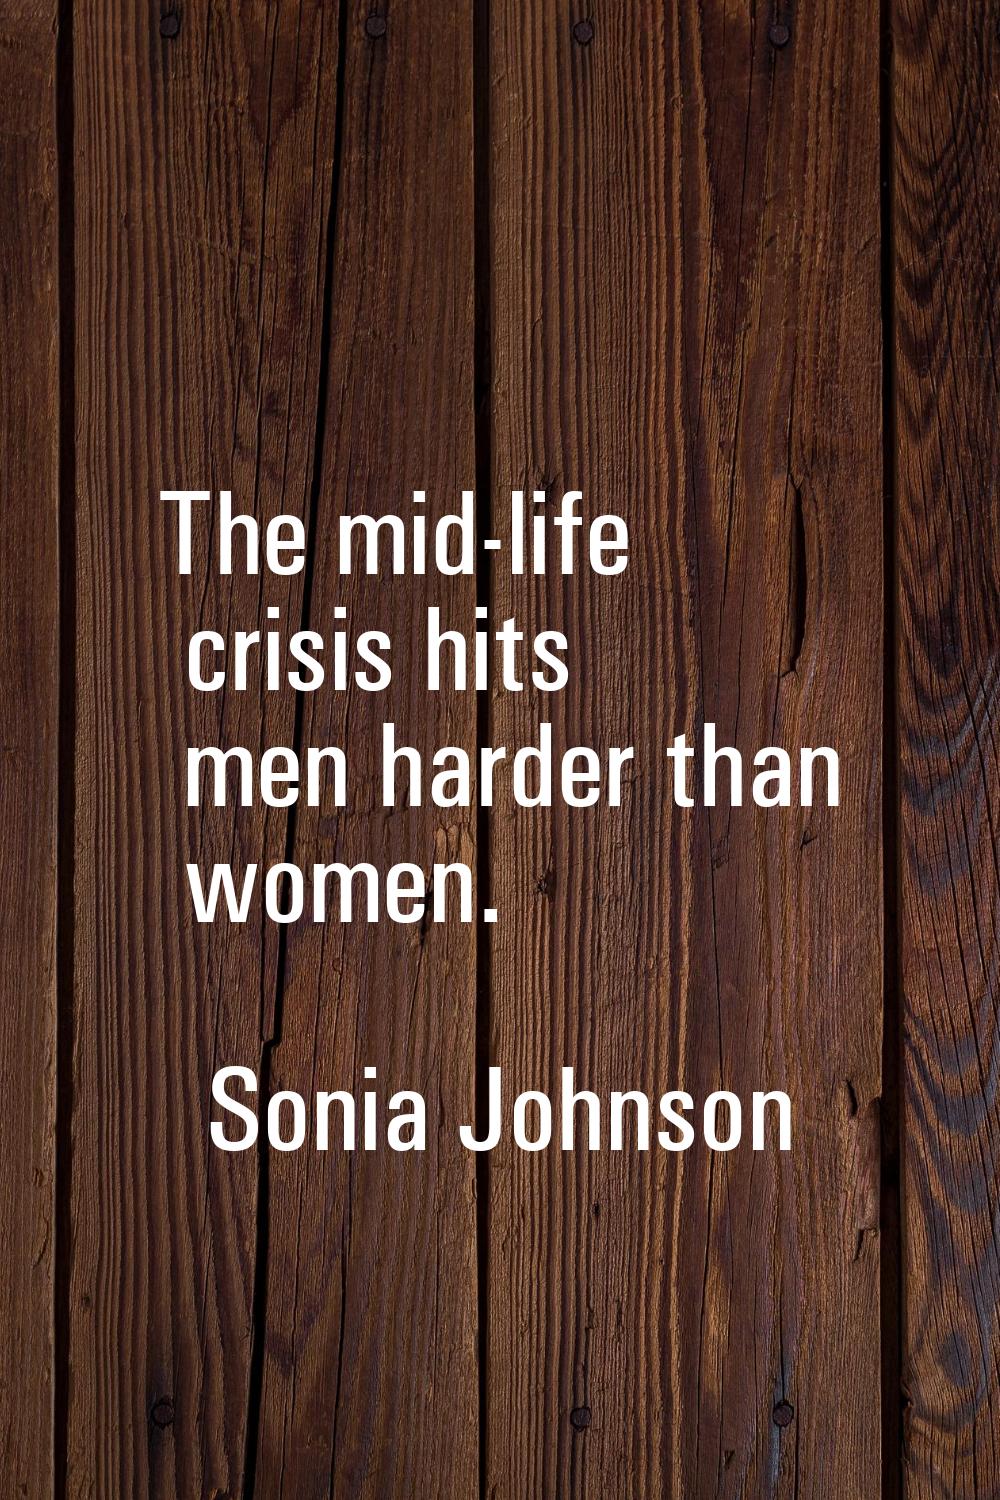 The mid-life crisis hits men harder than women.